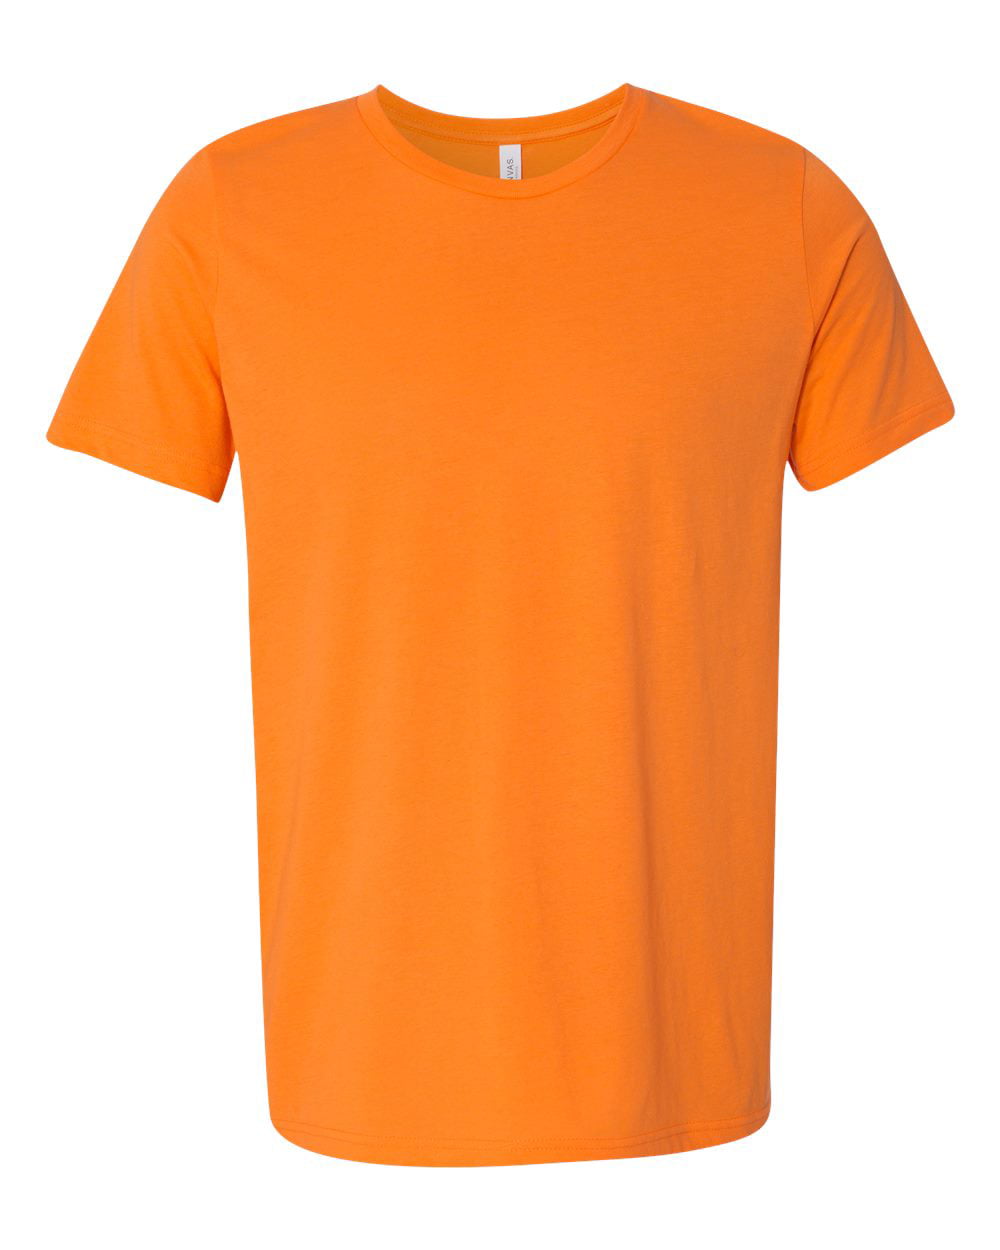 Unisex Poly-Cotton Short-Sleeve T-Shirt - NEON ORANGE - 2XL - Walmart.com